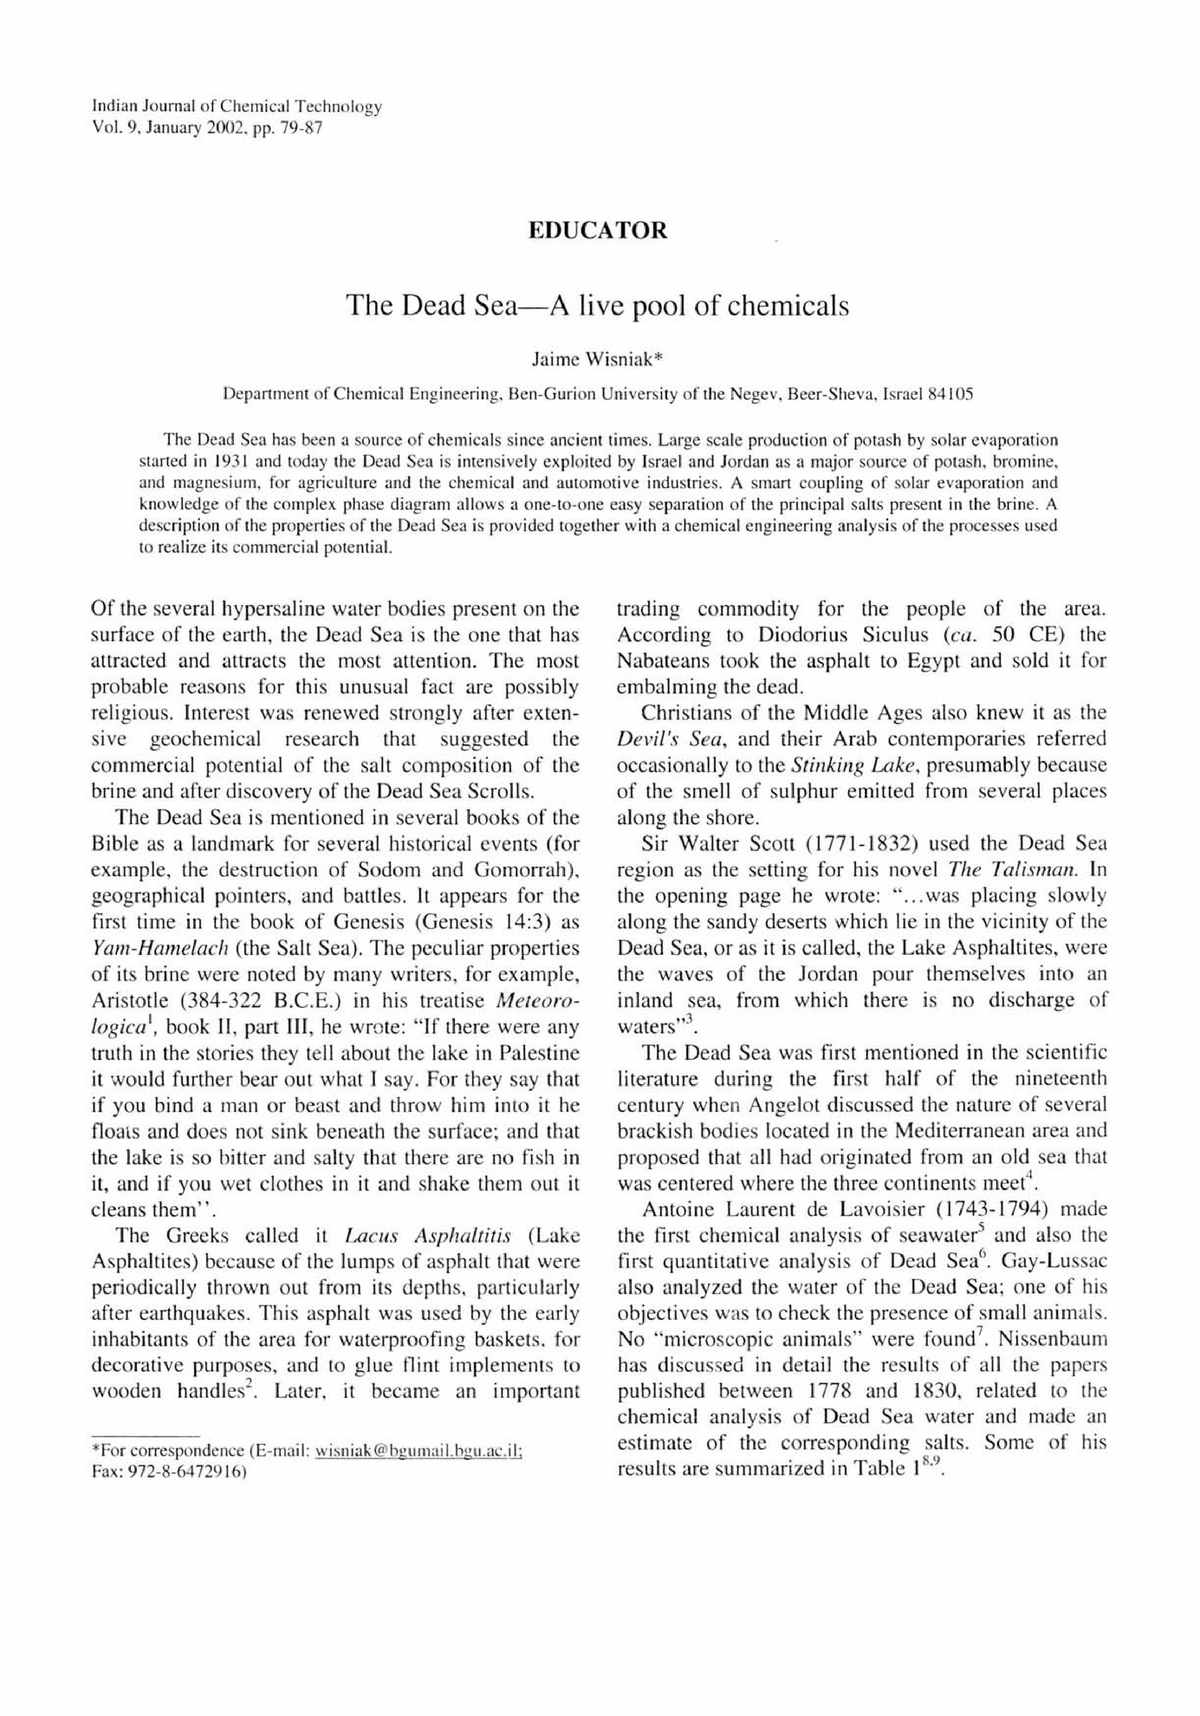 essay about dead sea